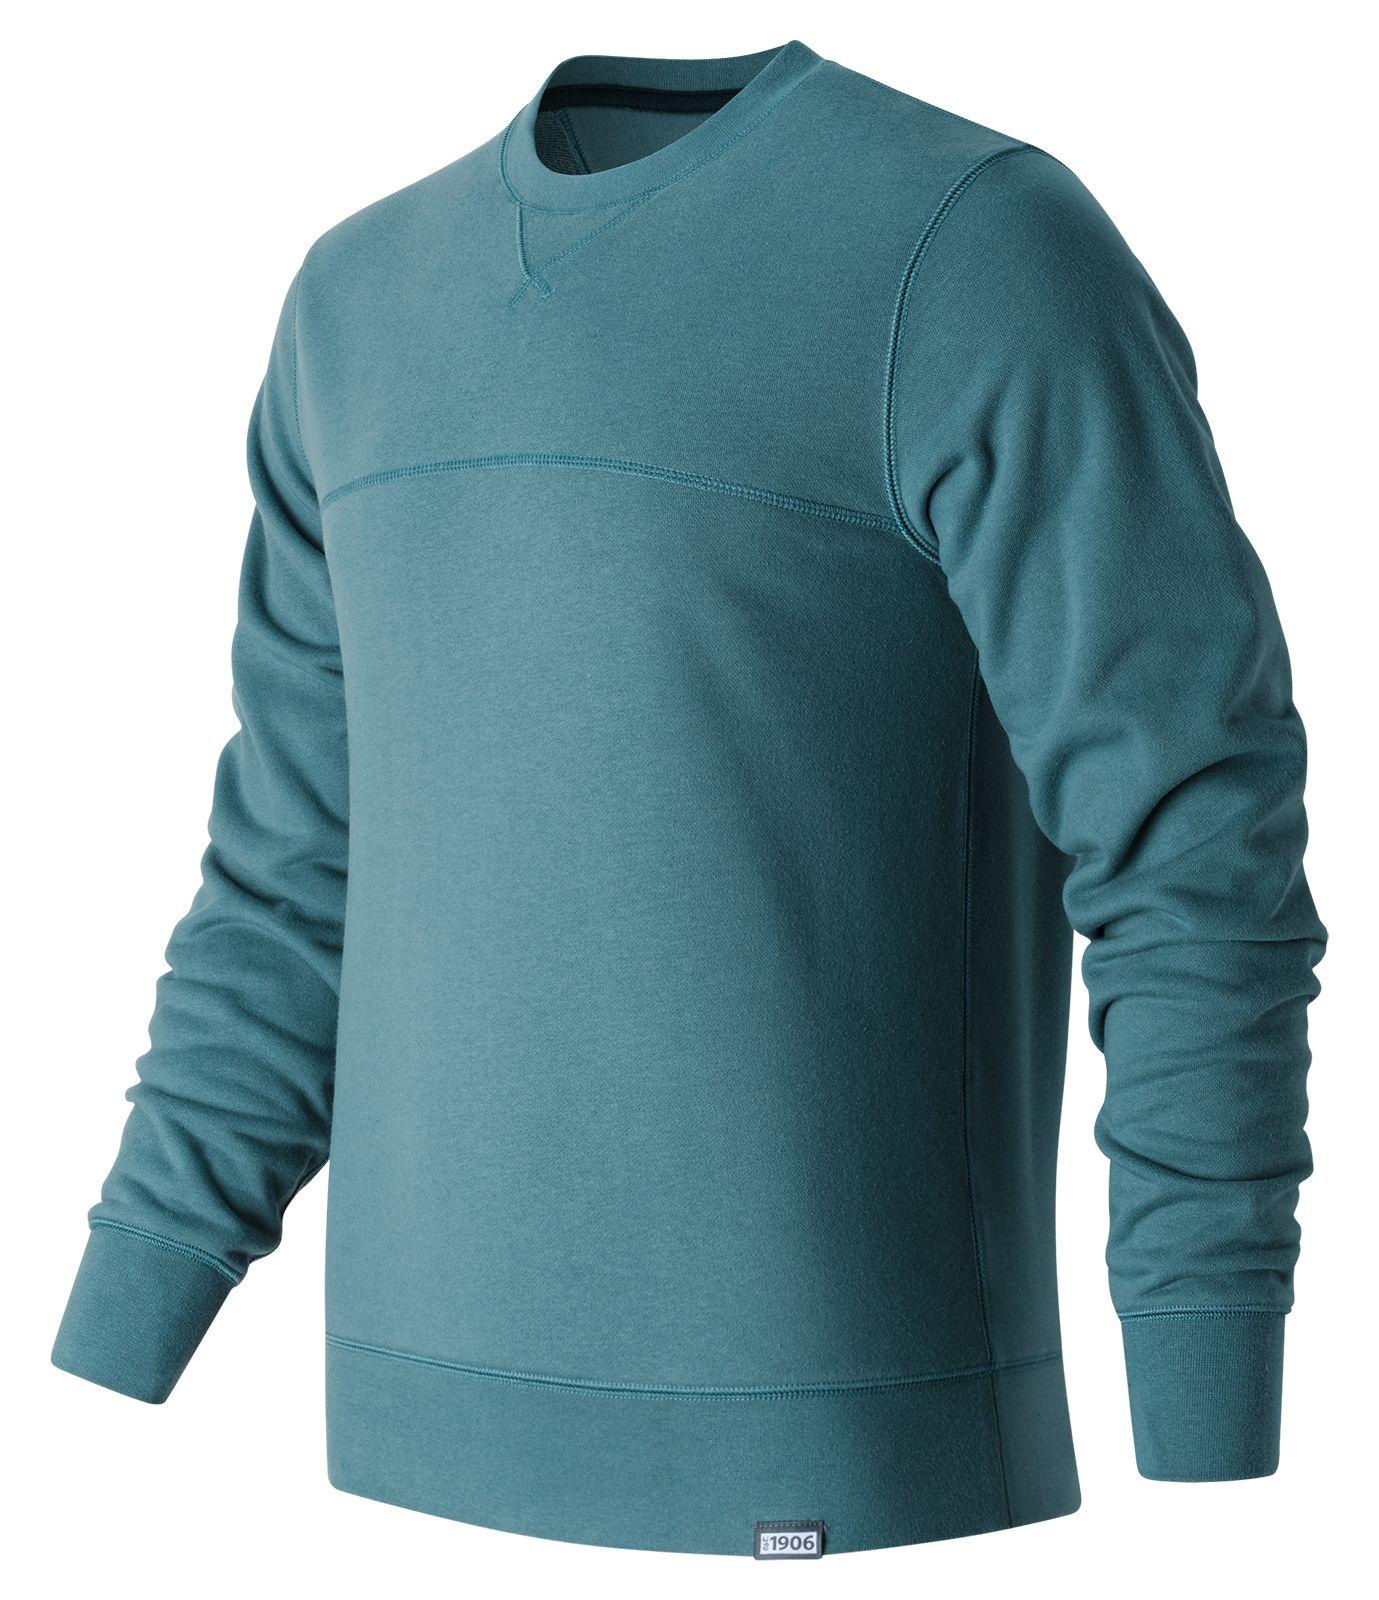 New Balance Cotton Classic Crewneck Sweatshirt in Blue for Men - Lyst